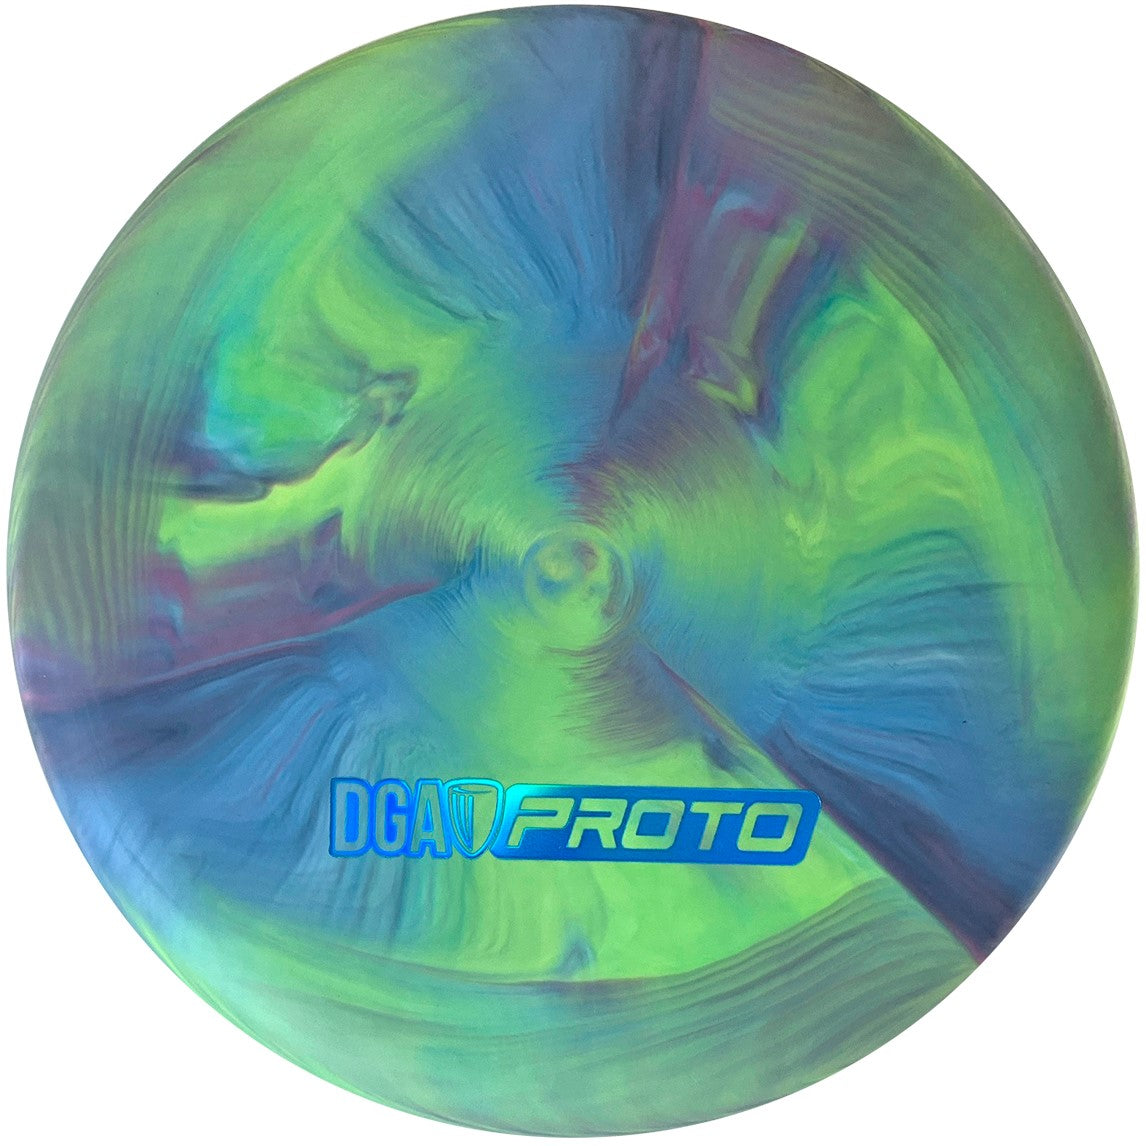 DGA Limited Edition Proto Swirl Base Blend Sonar Putter Golf Disc